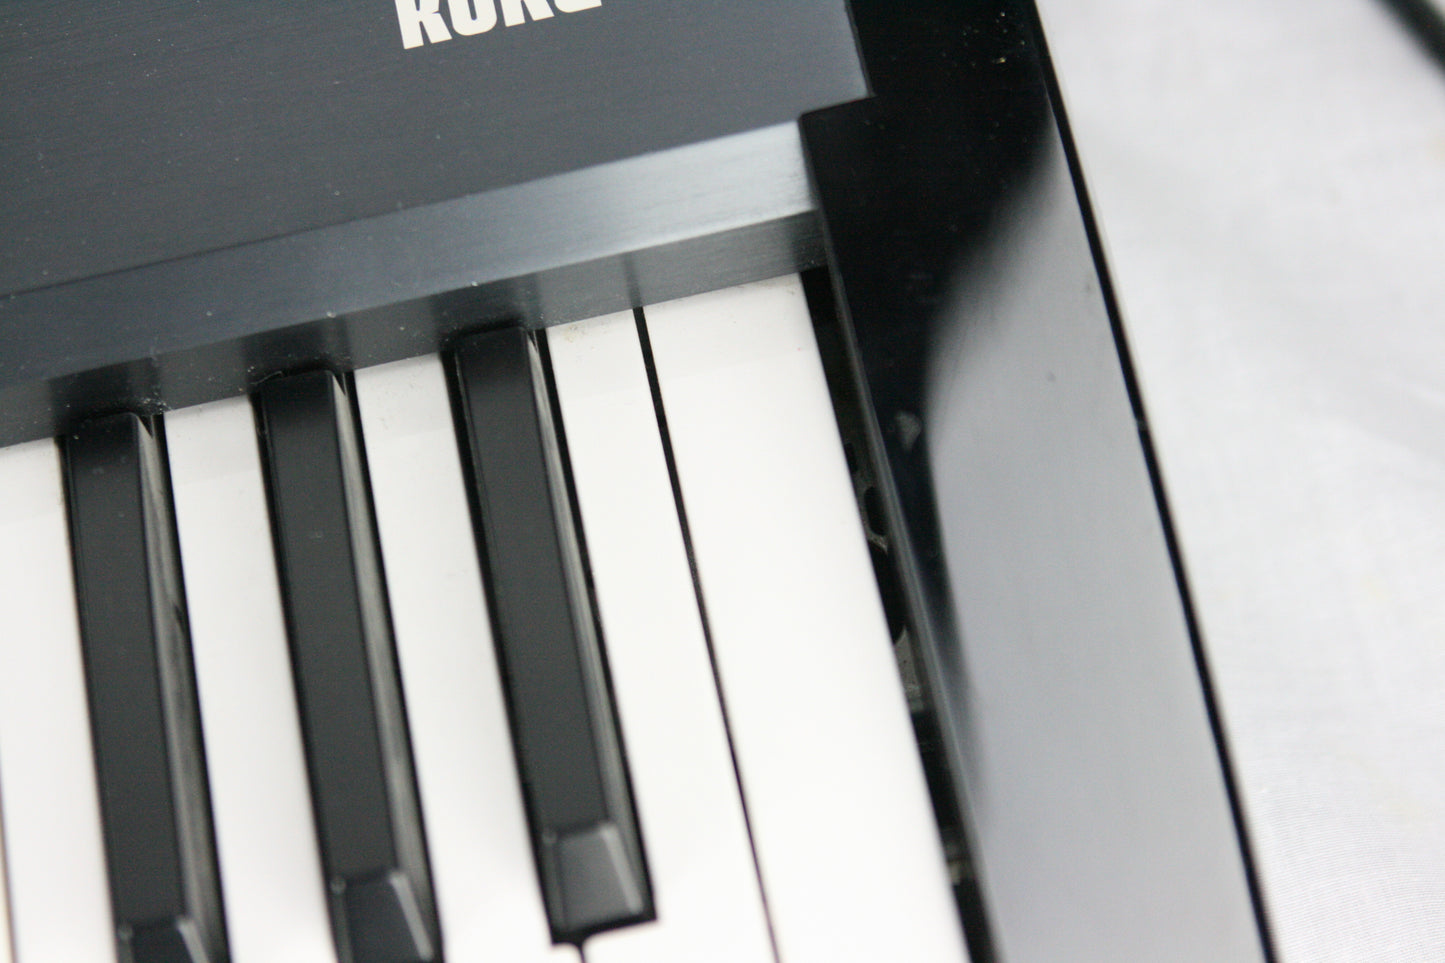 Korg Kronos-61 Keyboard Synthesizer Music Workstation 61 Key Made in Japan